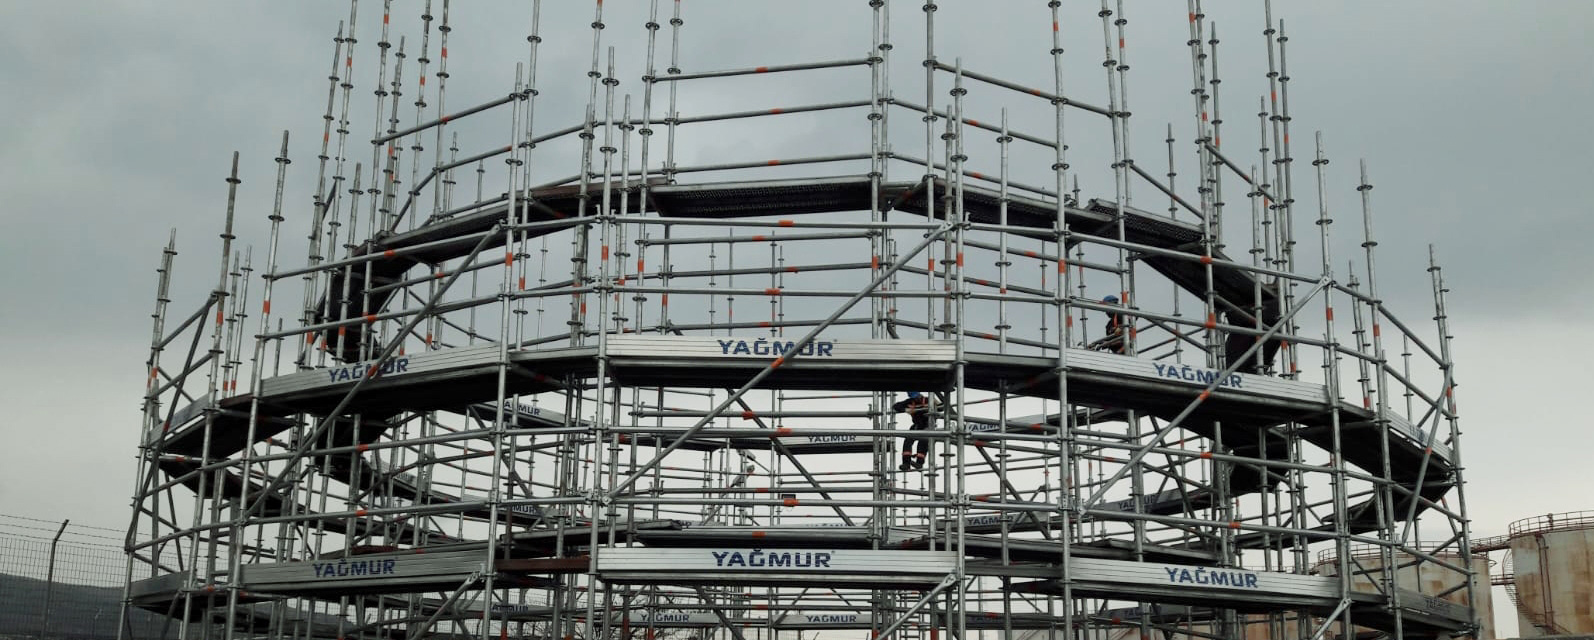 yagmur scaffolding industry 07 - Multidirectional Scaffolding System